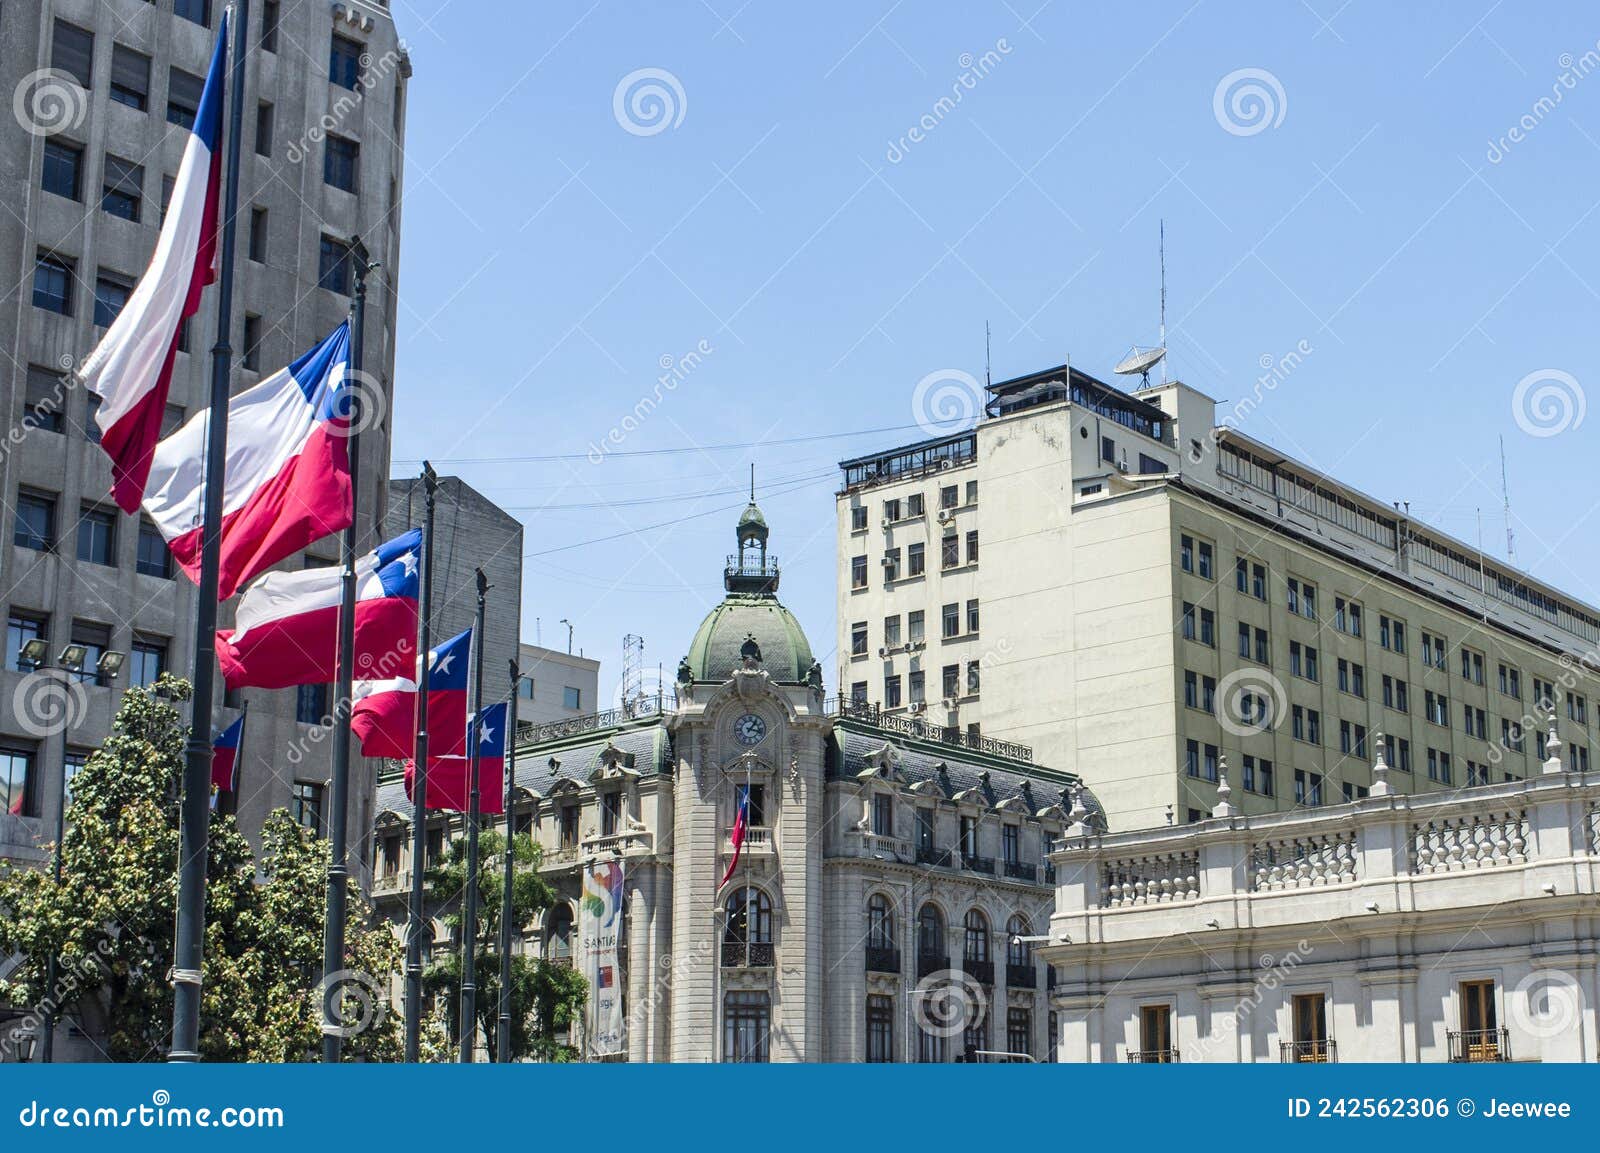 flags of chile in front of the presidential palace - palacio de la moneda - in santiago de chile, chile